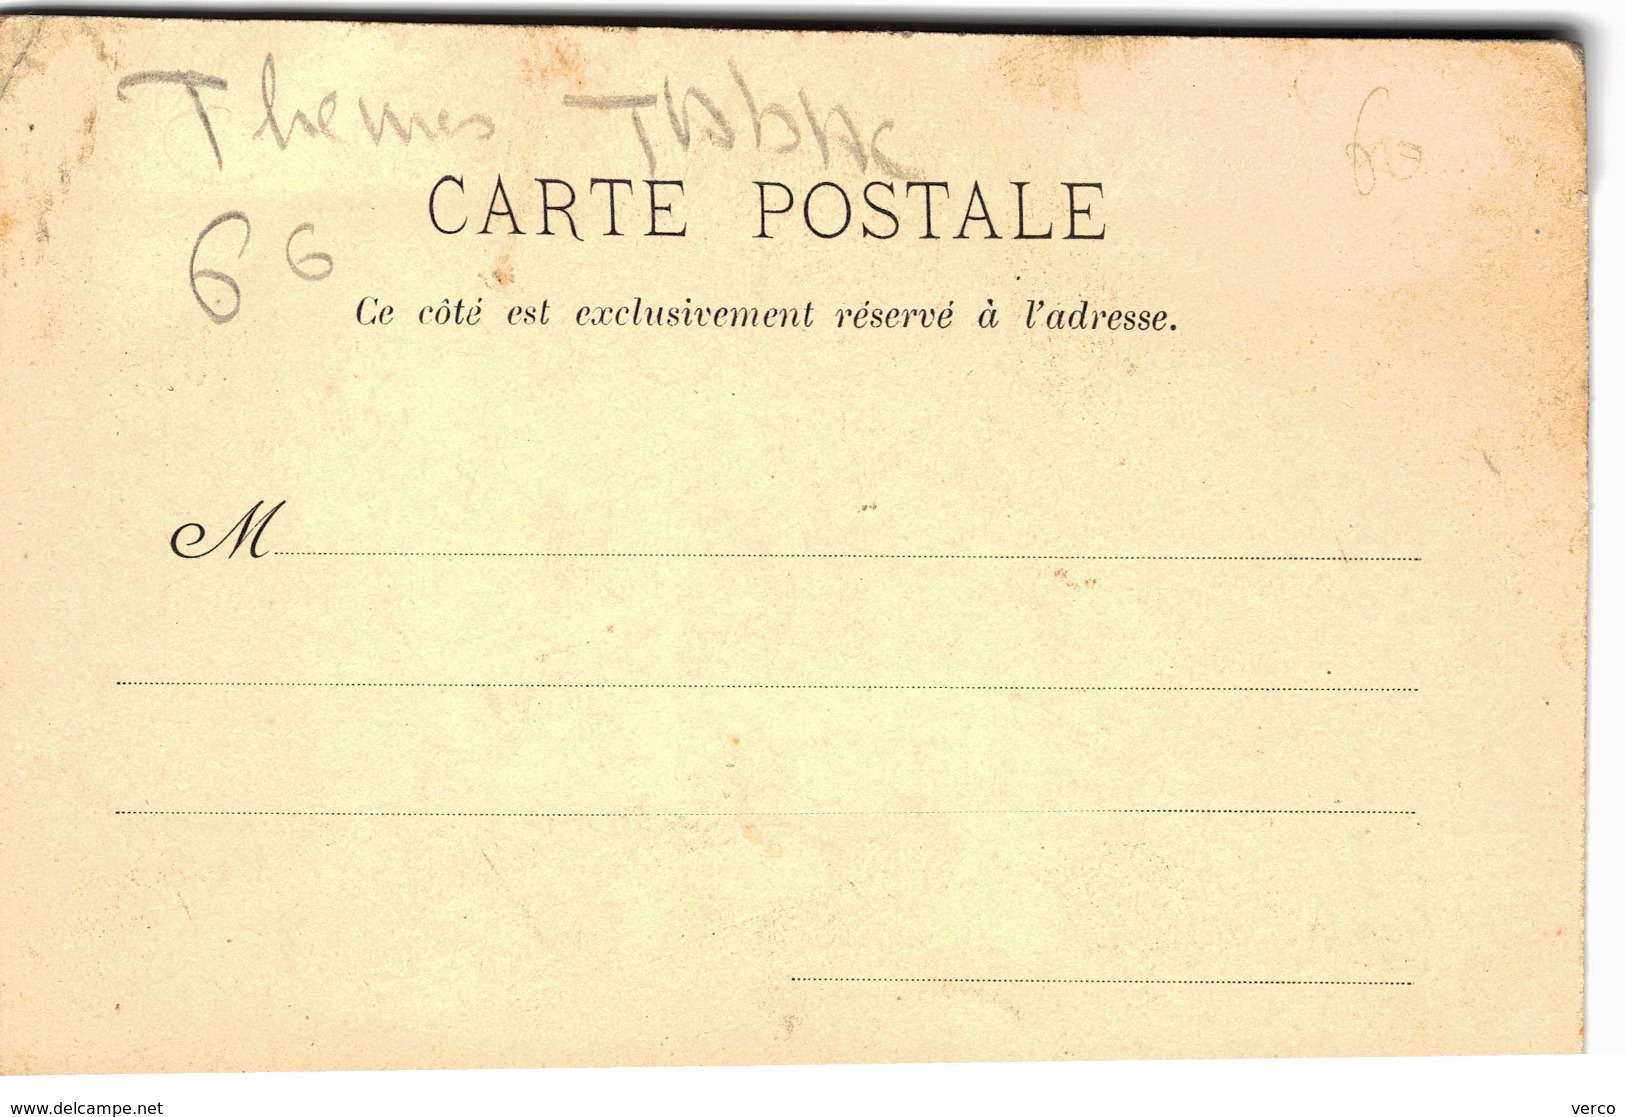 Carte Postale Ancienne De TABAC - Tobacco